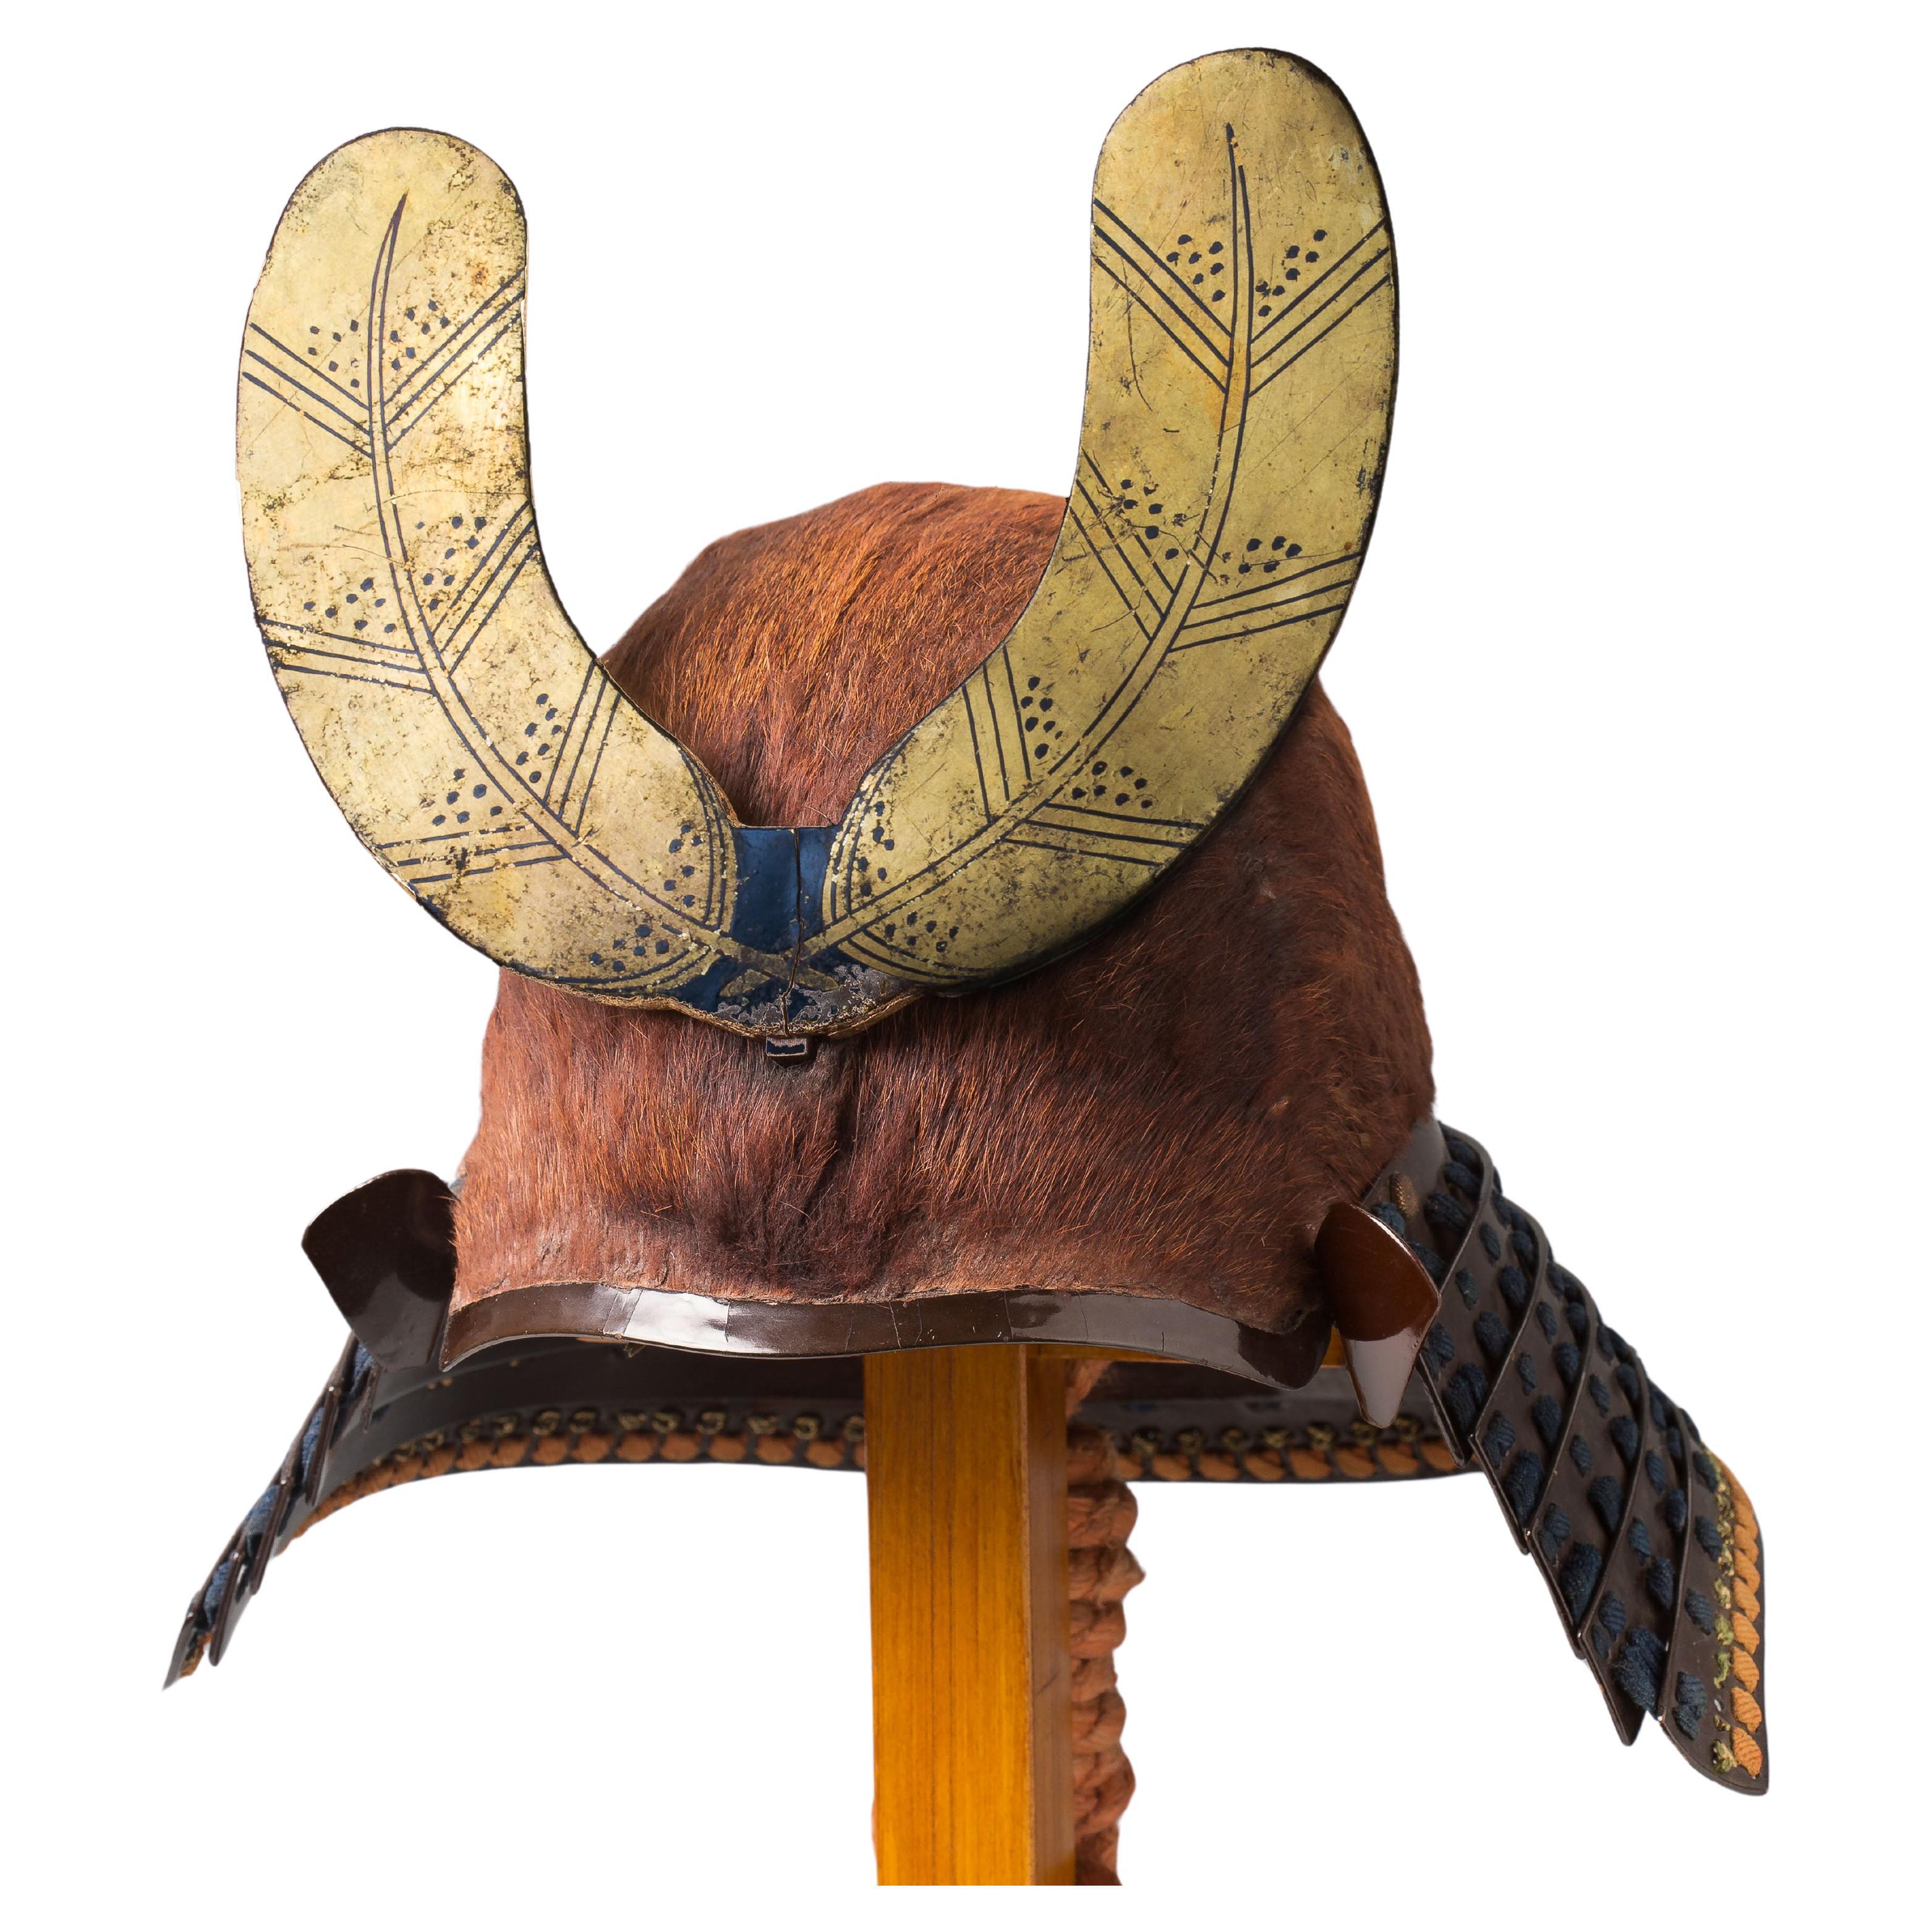 Sogonari Kabuto Samurai Helm in Form eines menschlichen Kopfes, frühe Edo-Periode